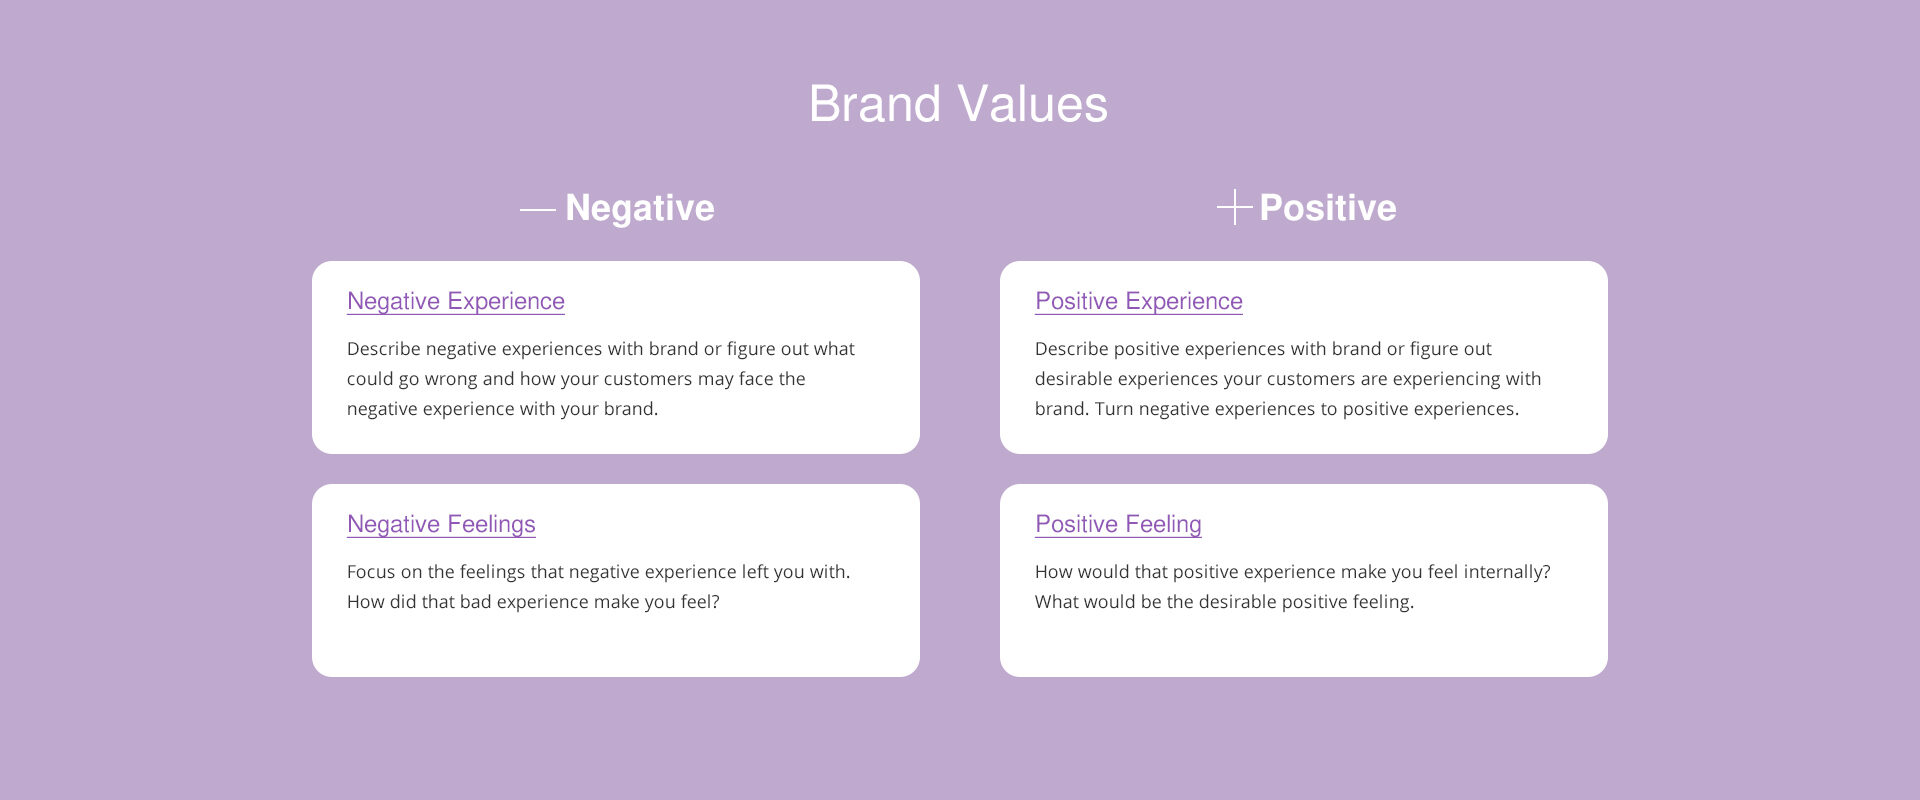 Brand Value Strategy - Digital Marketing Strategy